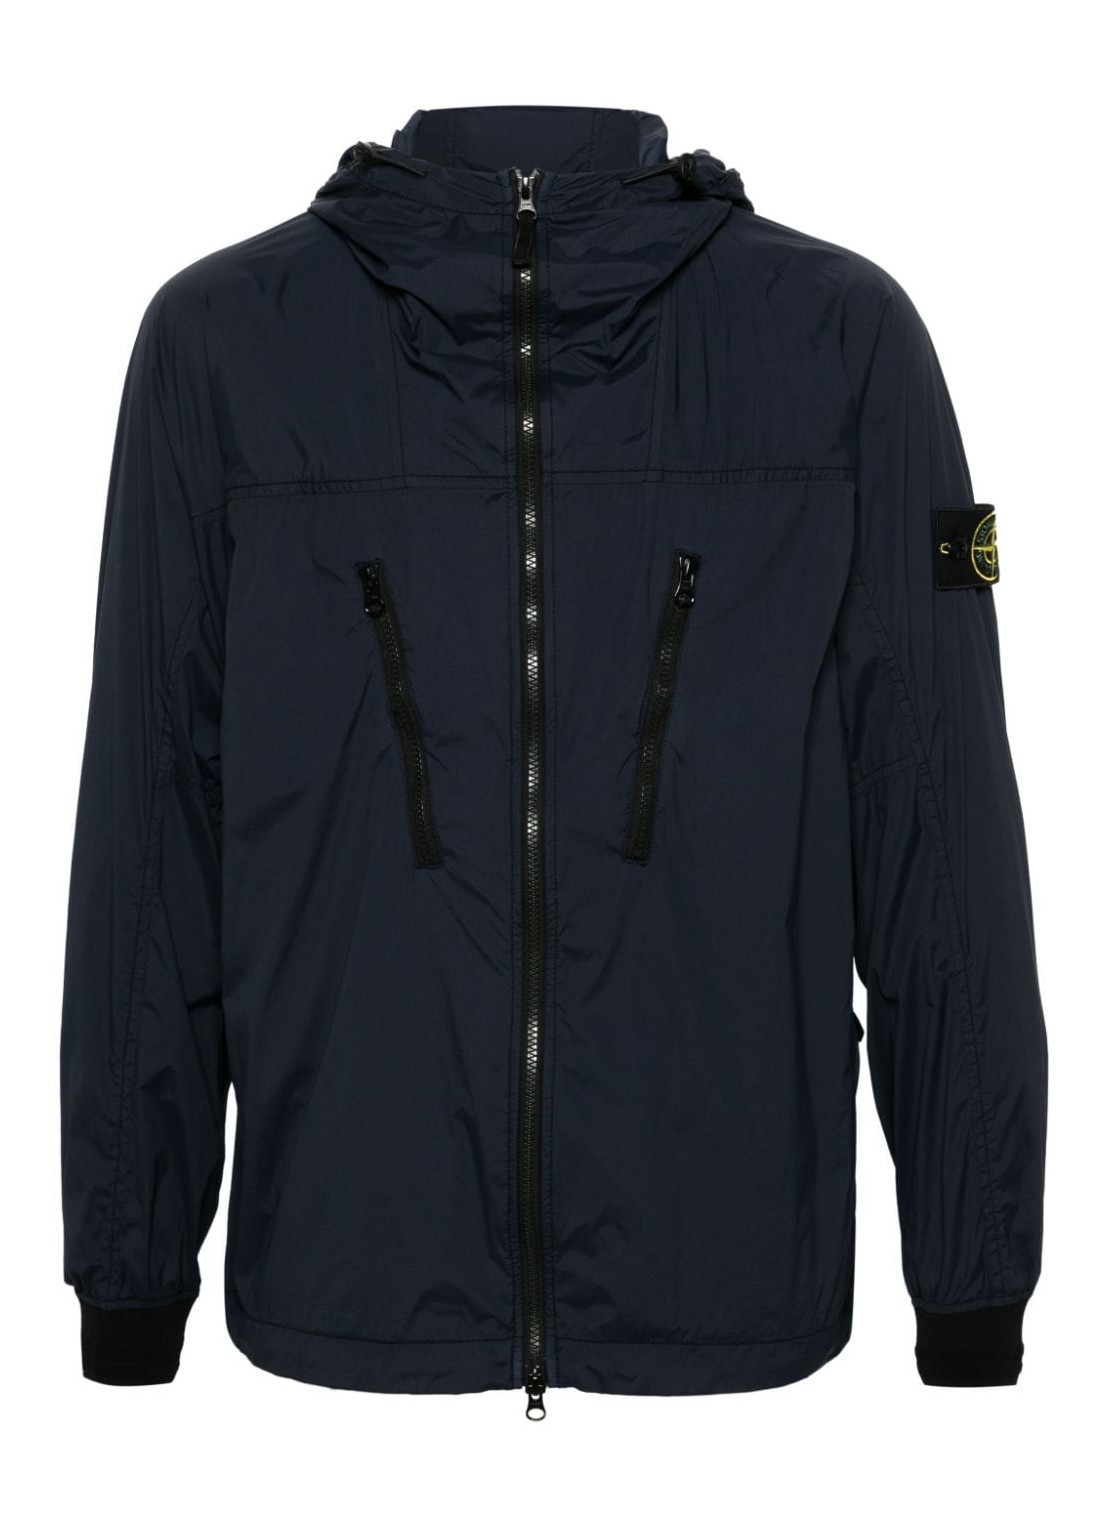 Outerwear stone island outerwear man packable jacket 801540425 v0020 talla XXL
 